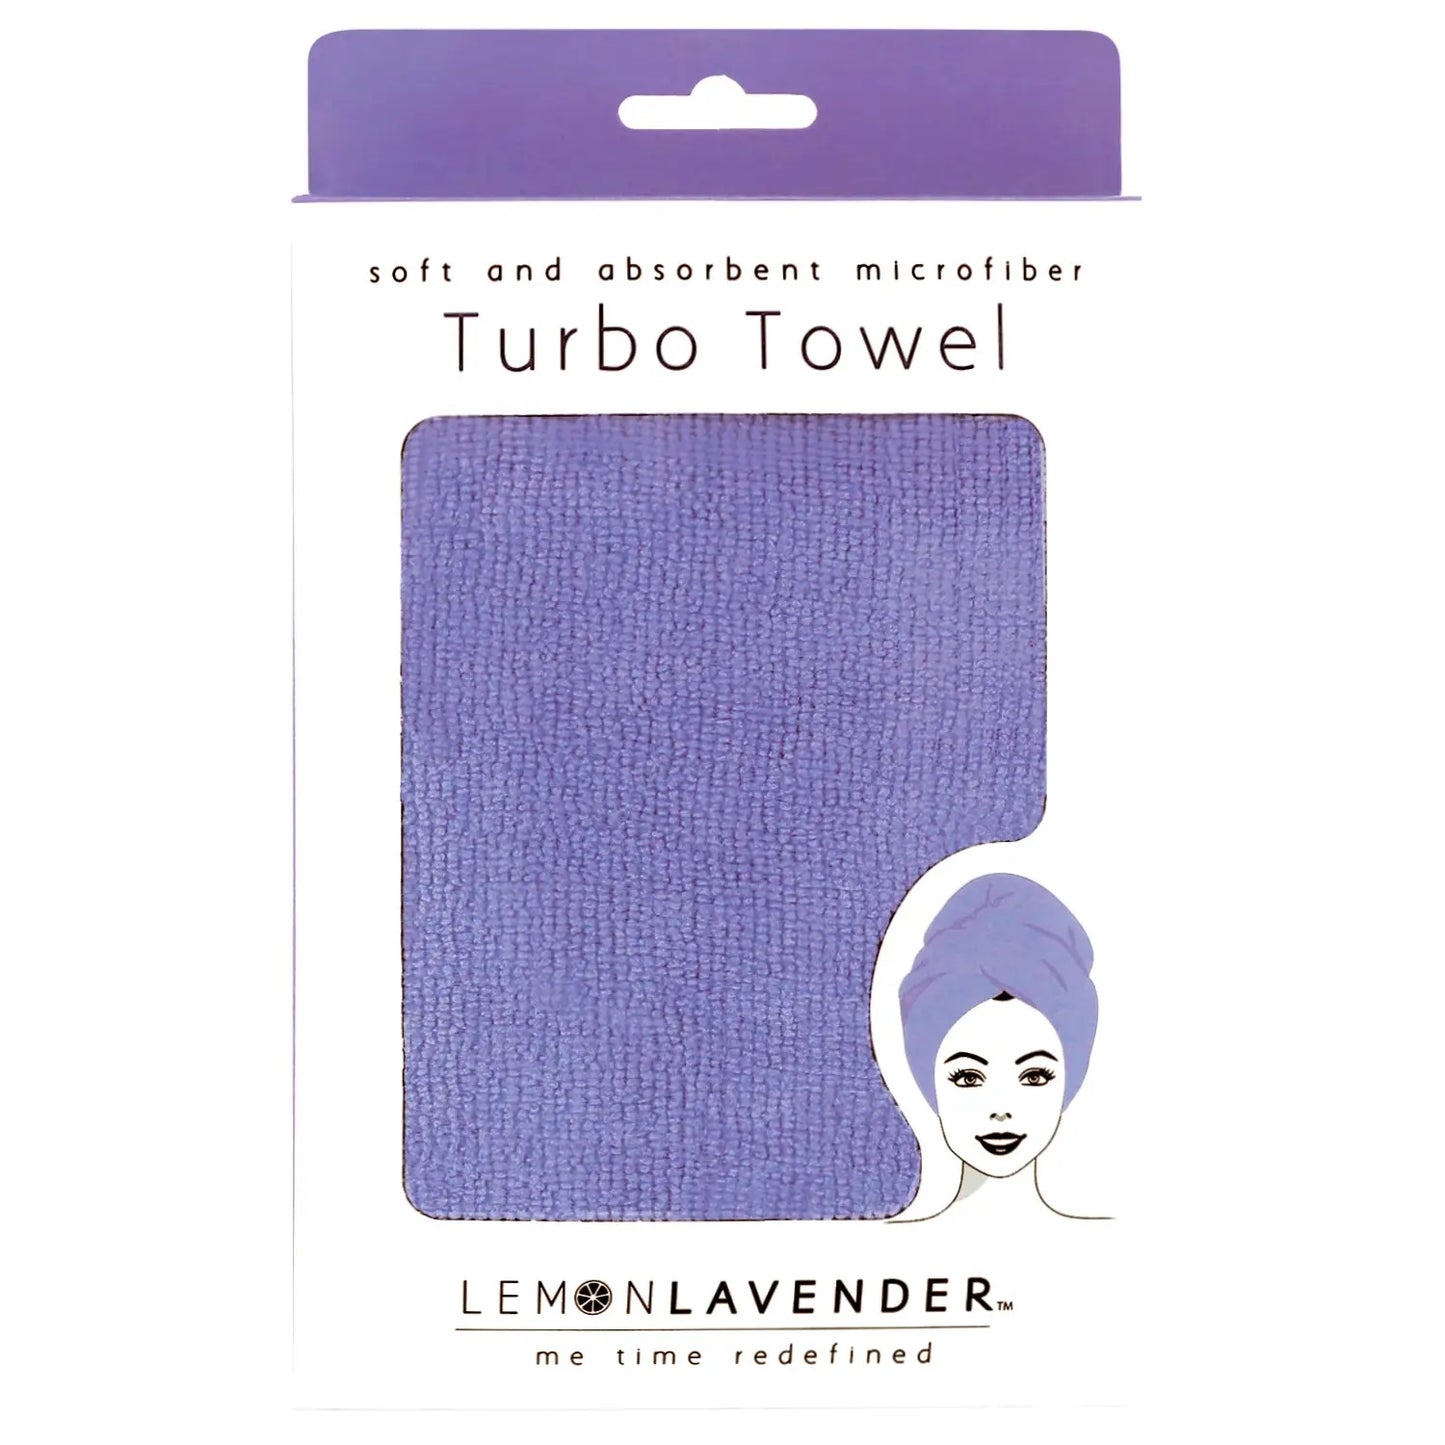 Body- Lemon Lavender Turbo Towel